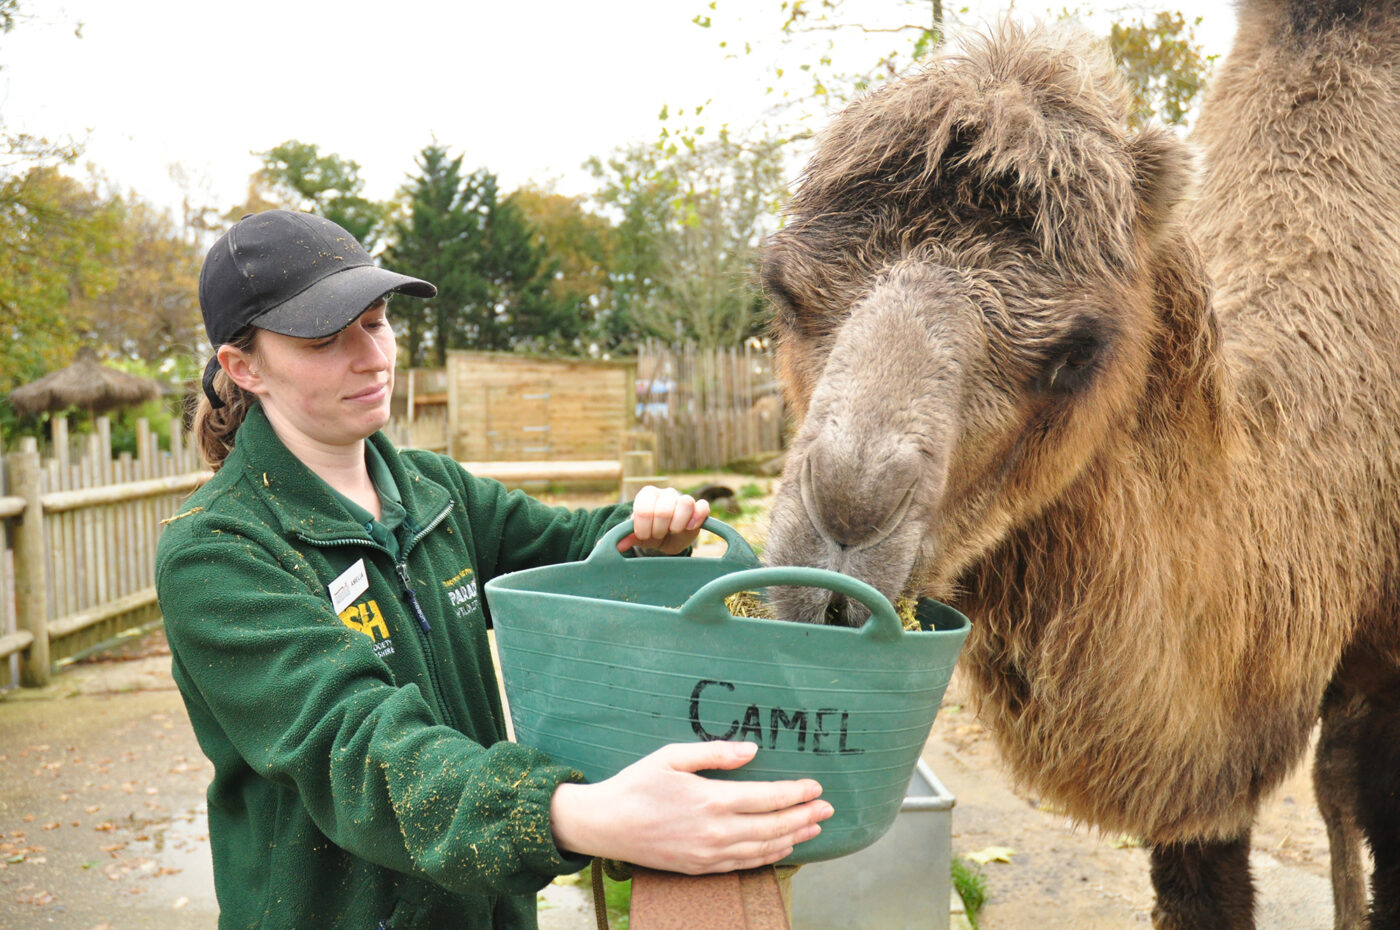 Bactrian Camel eating Alfa-A Original from bucket